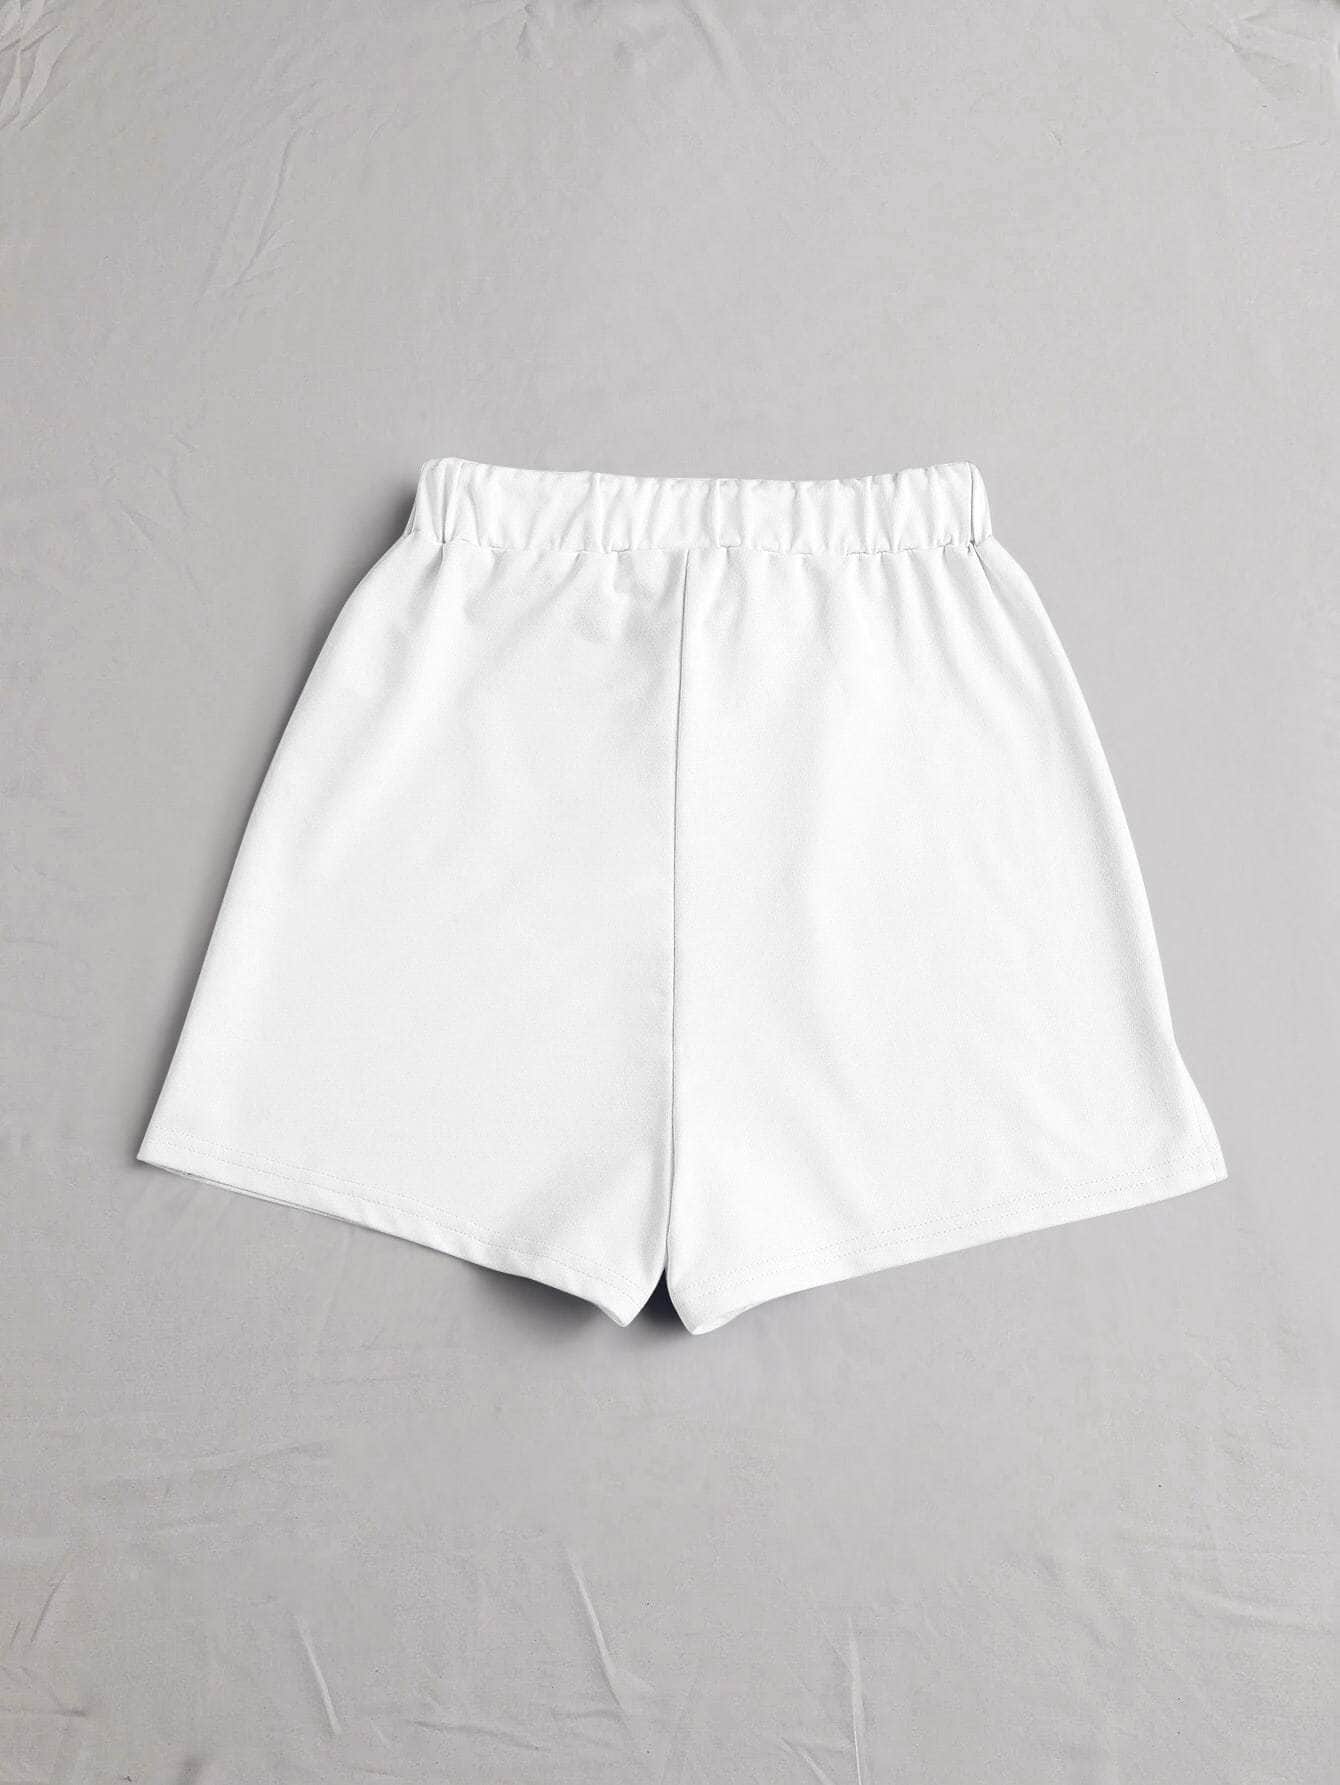 Blanco / M Shorts Nudo Liso Casual